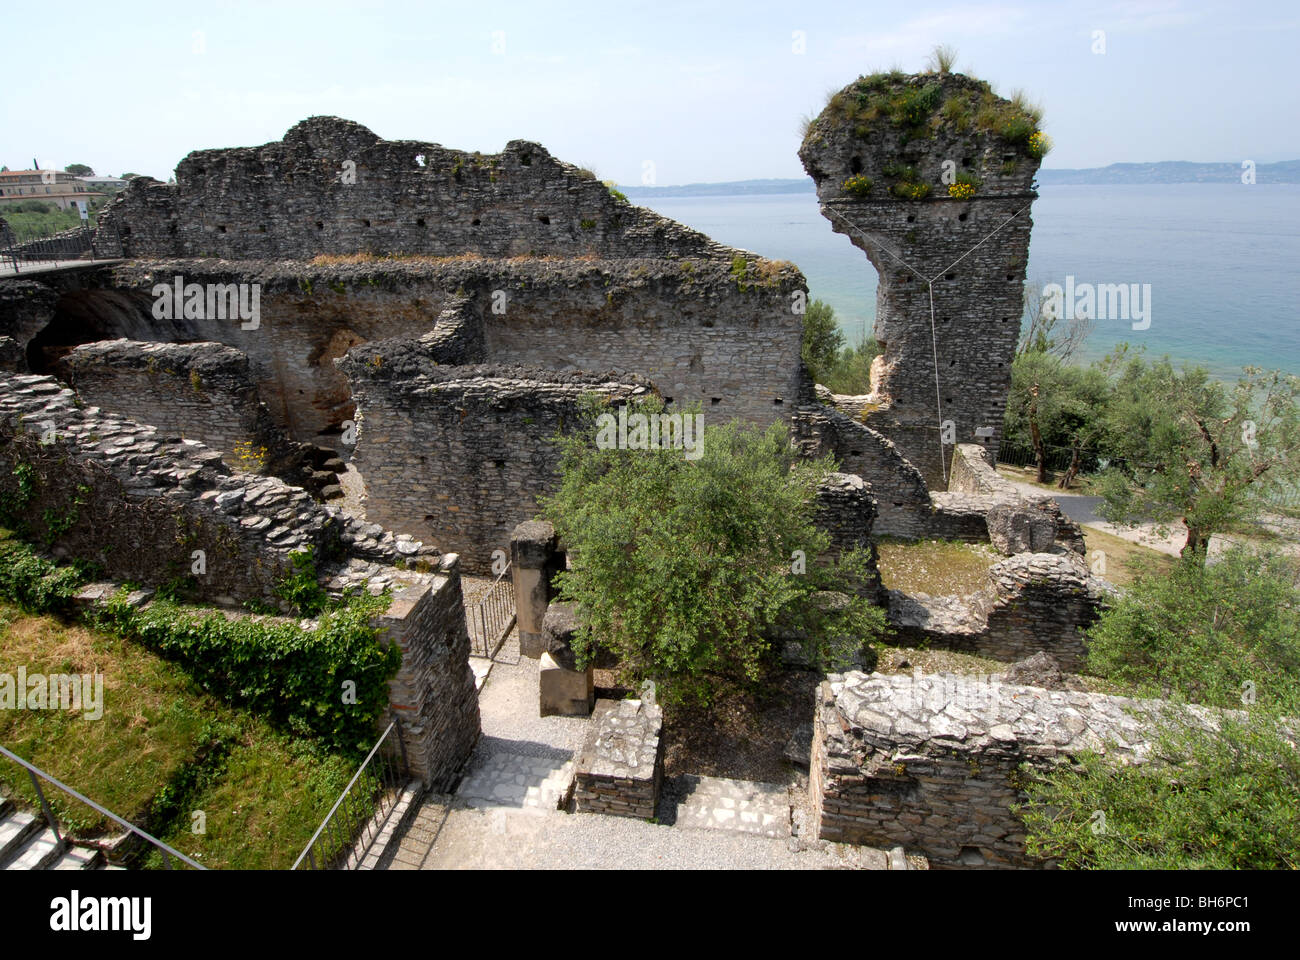 Roman ruins at Sirmione, Lake Garda, Italy Stock Photo